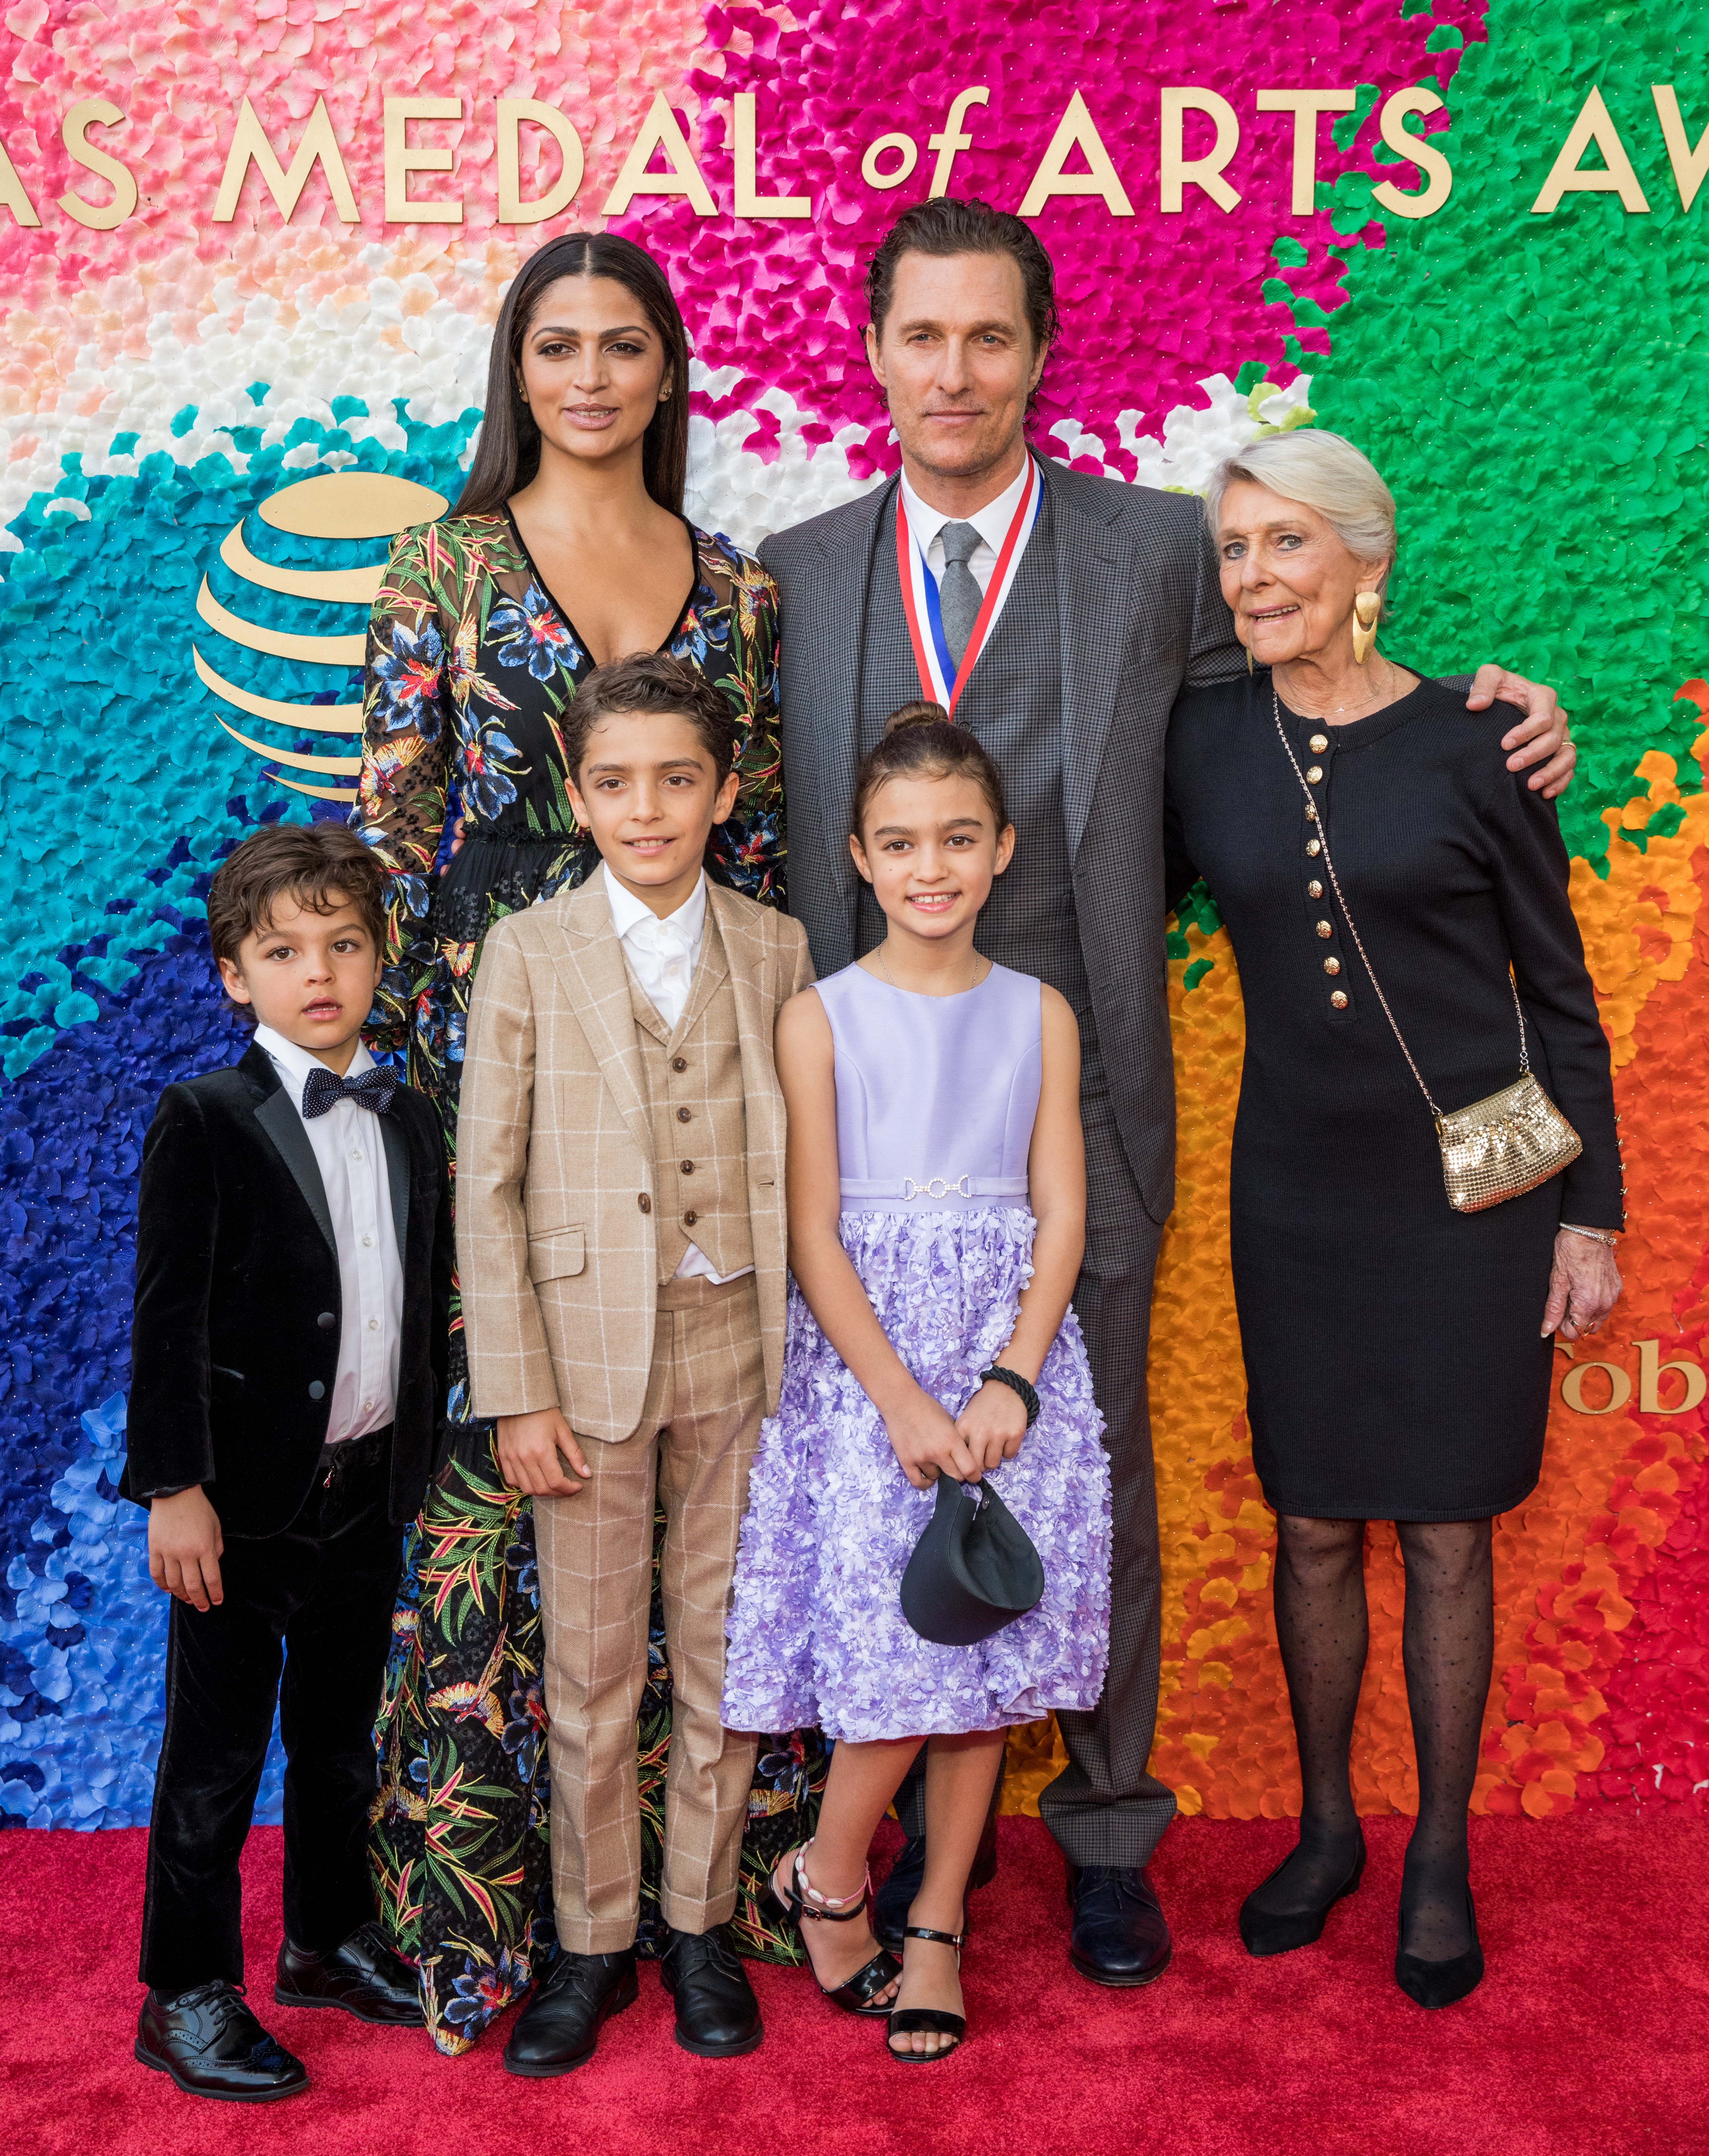 Livingston Alves McConaughey, Camila Alves, Levi Alves McConaughey, Matthew McConaughey, Vida Alves McConaughey y Kay McConaughey en los Premios Medalla de las Artes de Texas el 27 de febrero de 2019, en Austin, Texas | Foto: Getty Images